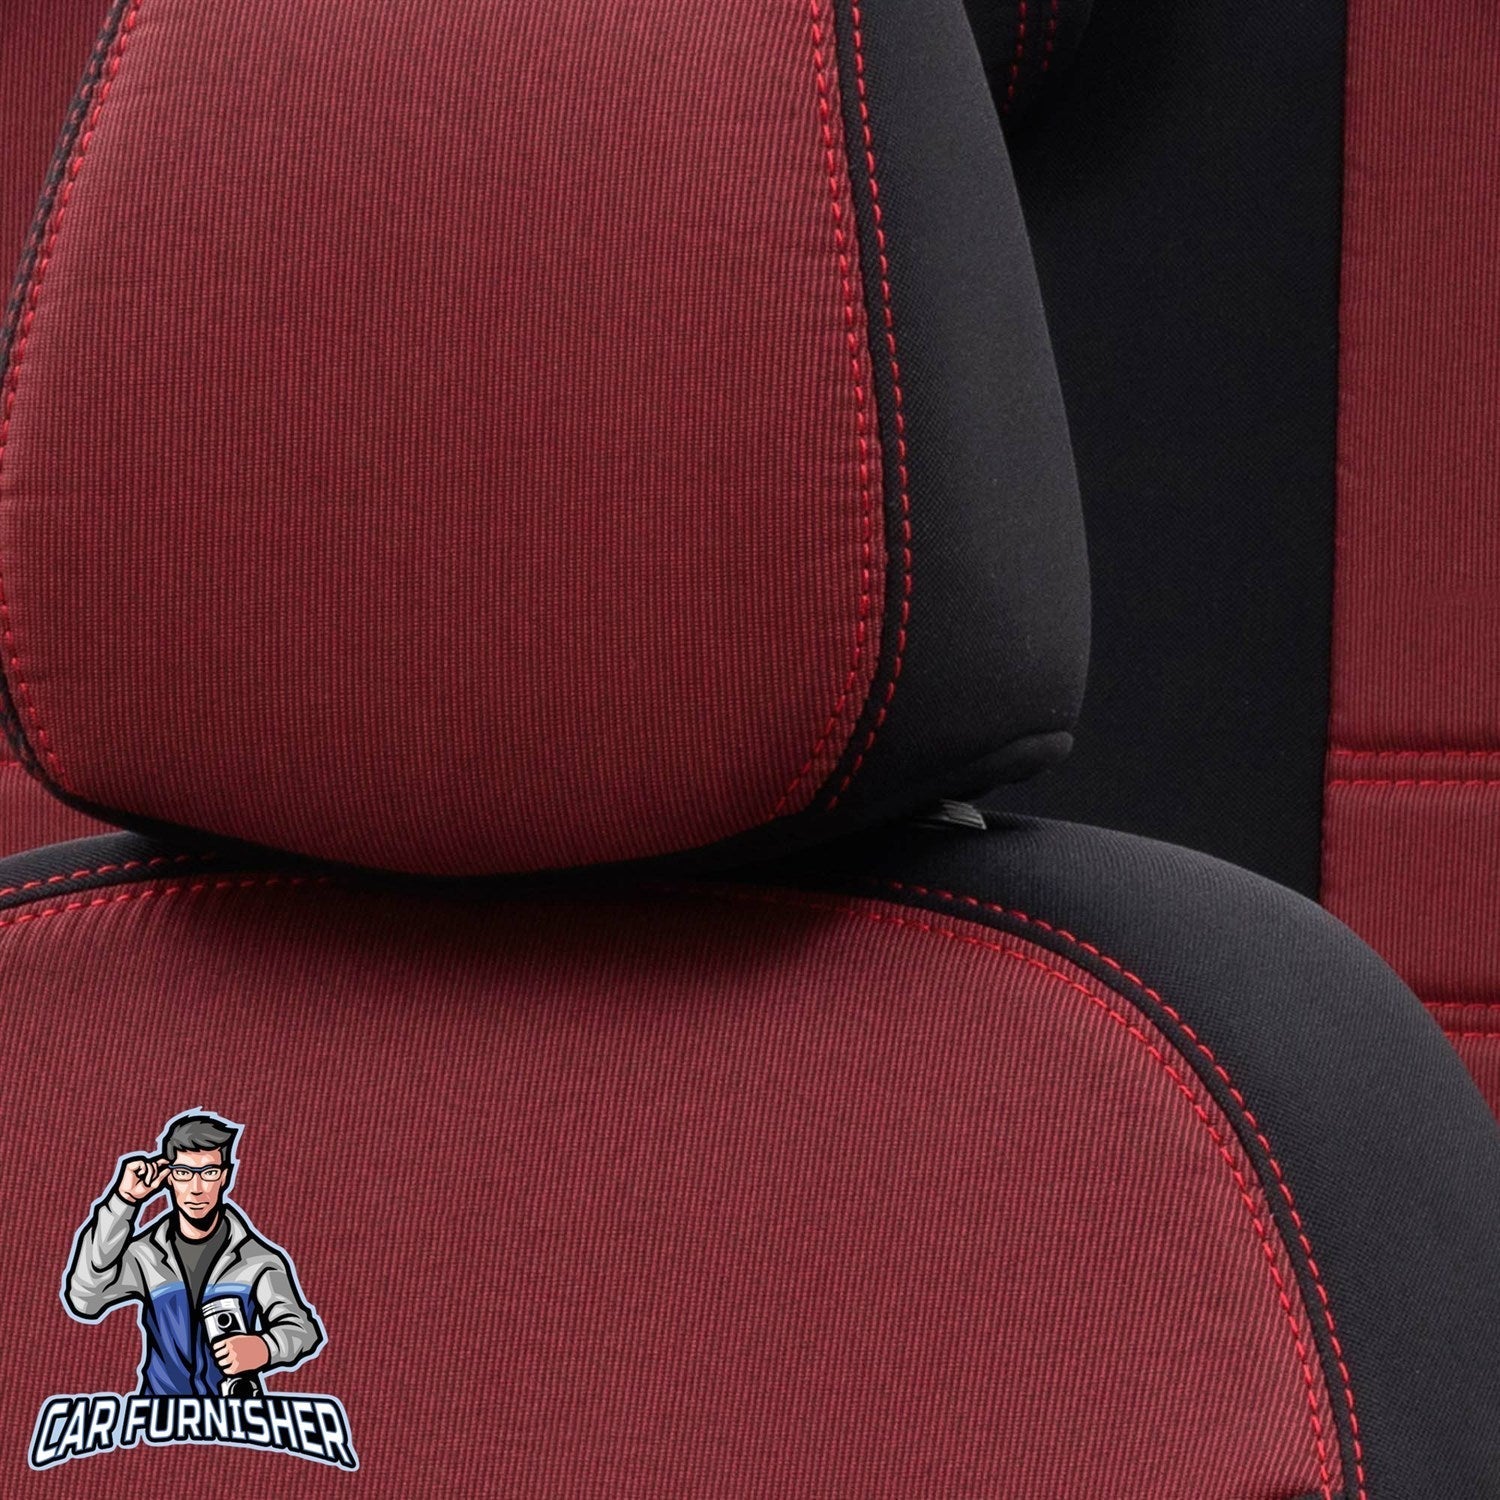 Ford Kuga Seat Covers Original Jacquard Design Red Jacquard Fabric